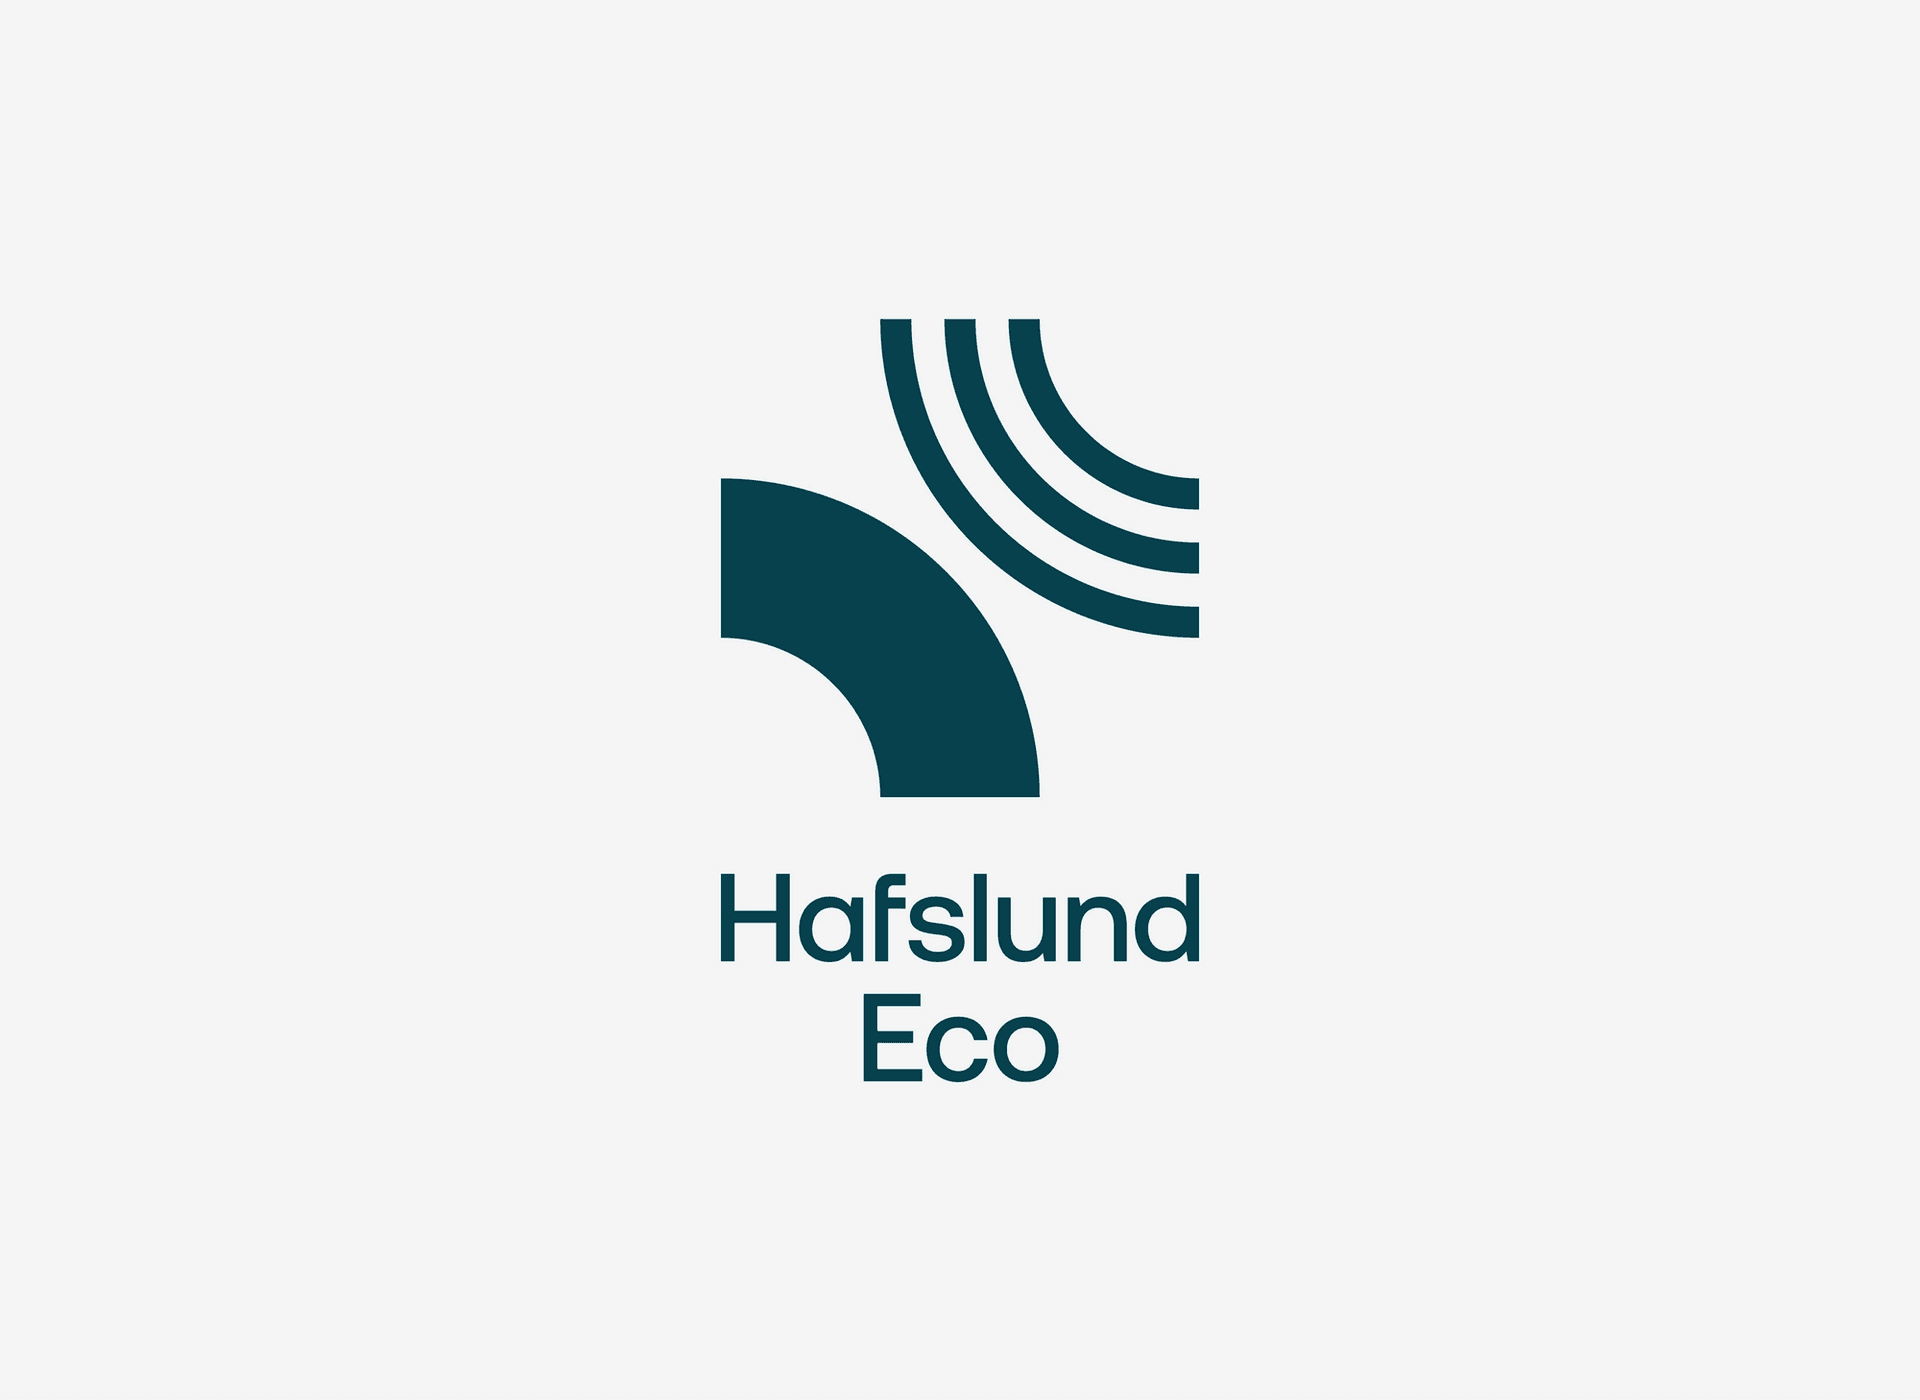 Hafslund Eco